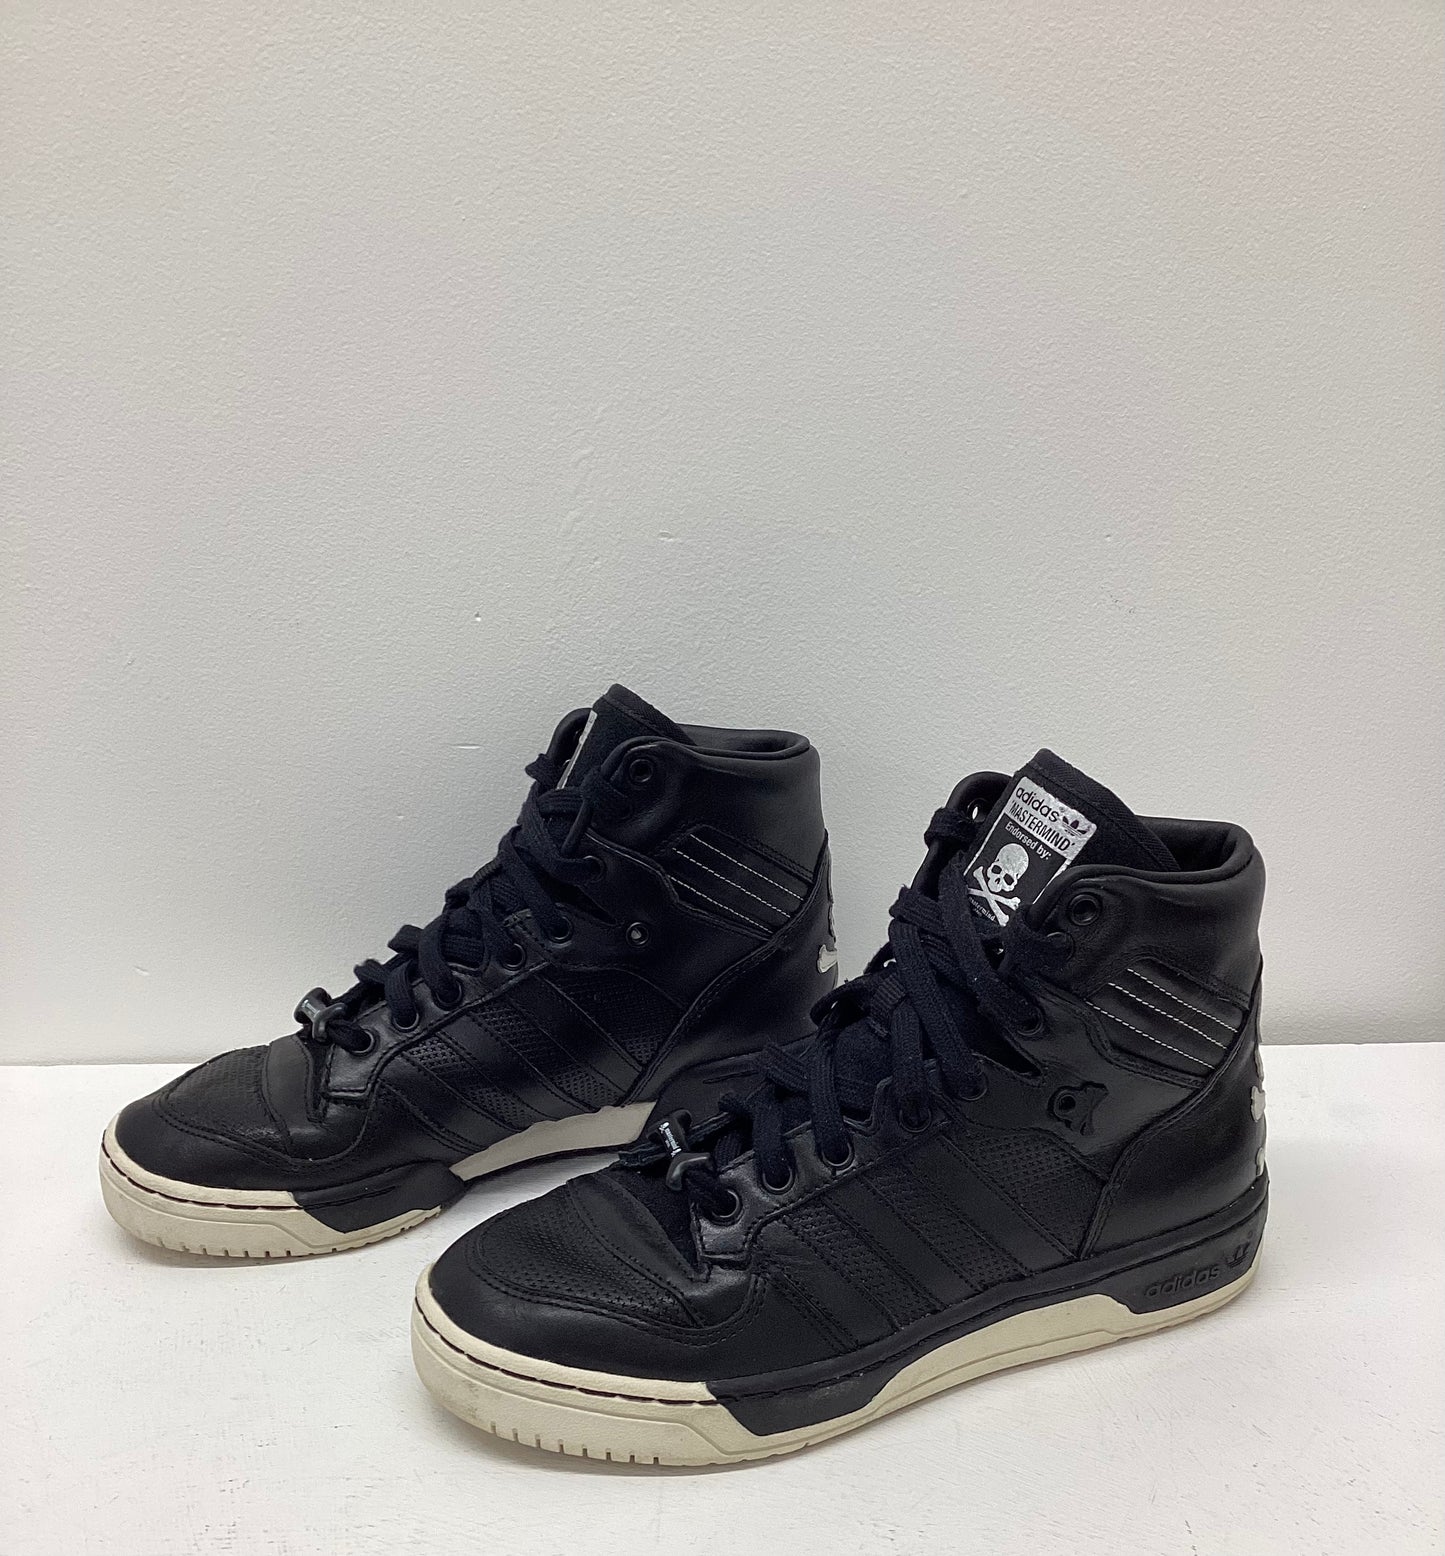 Adidas Consortium x Mastermind Japan Rivalry HI Black Trainers G96303 (Size 4 UK)